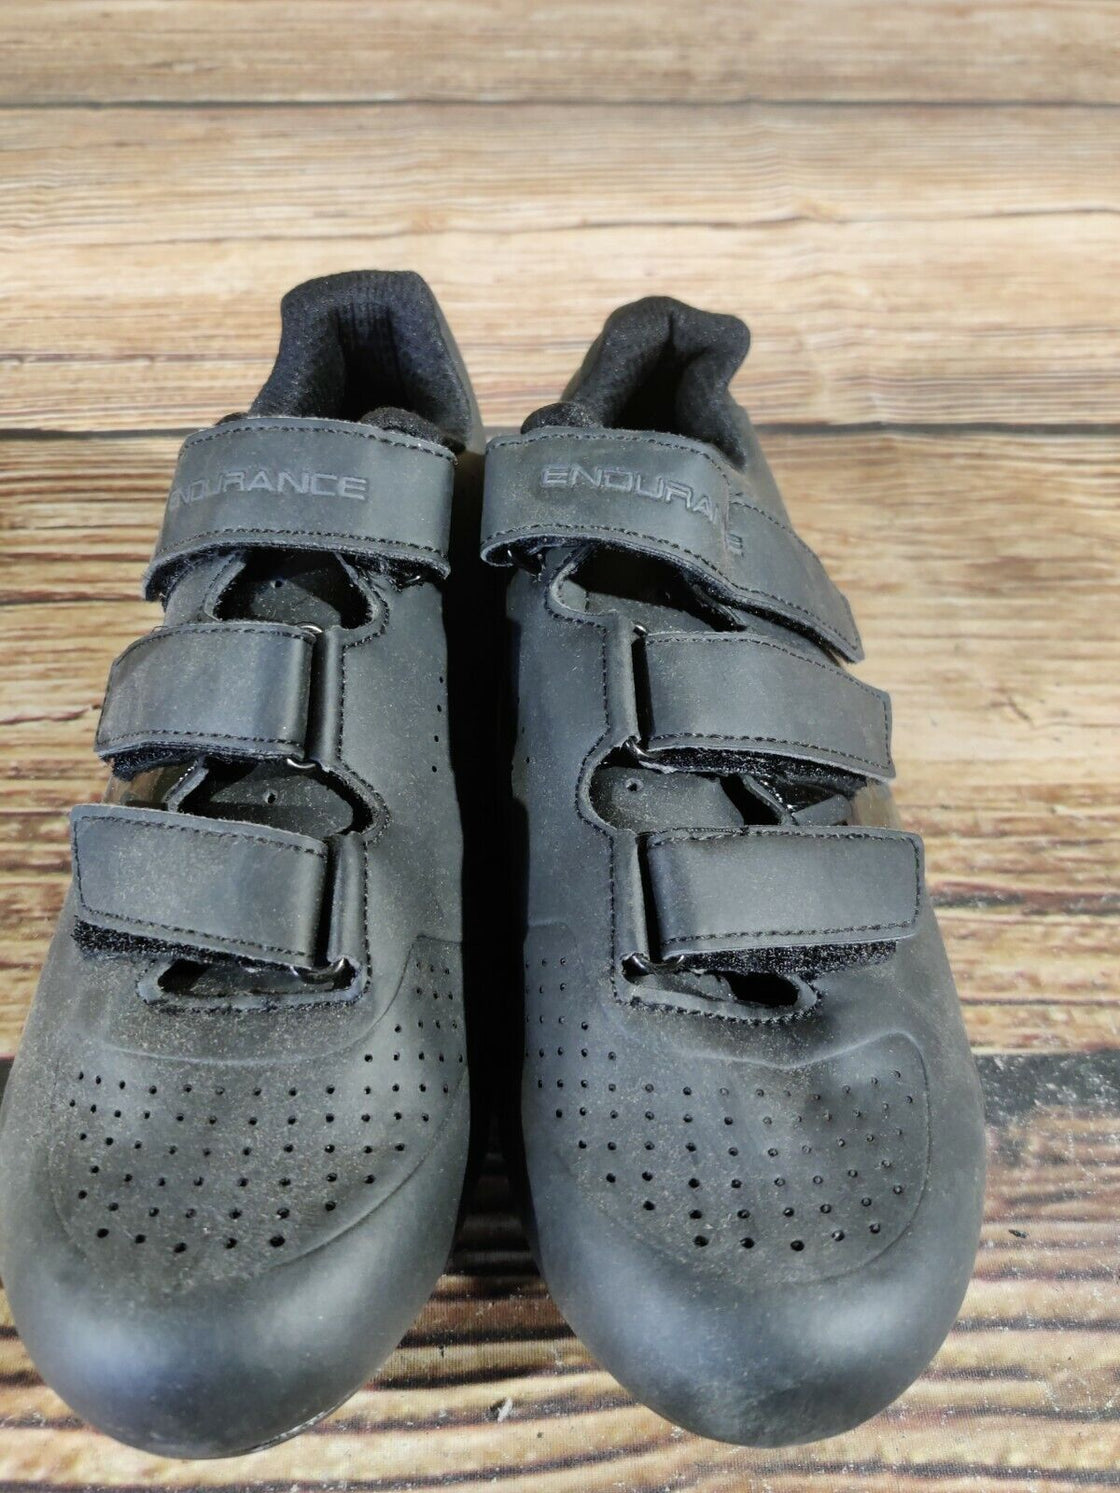 ENDURANCE Road Cycling Shoes Biking Boots 3 Bolts Size EU39, US7